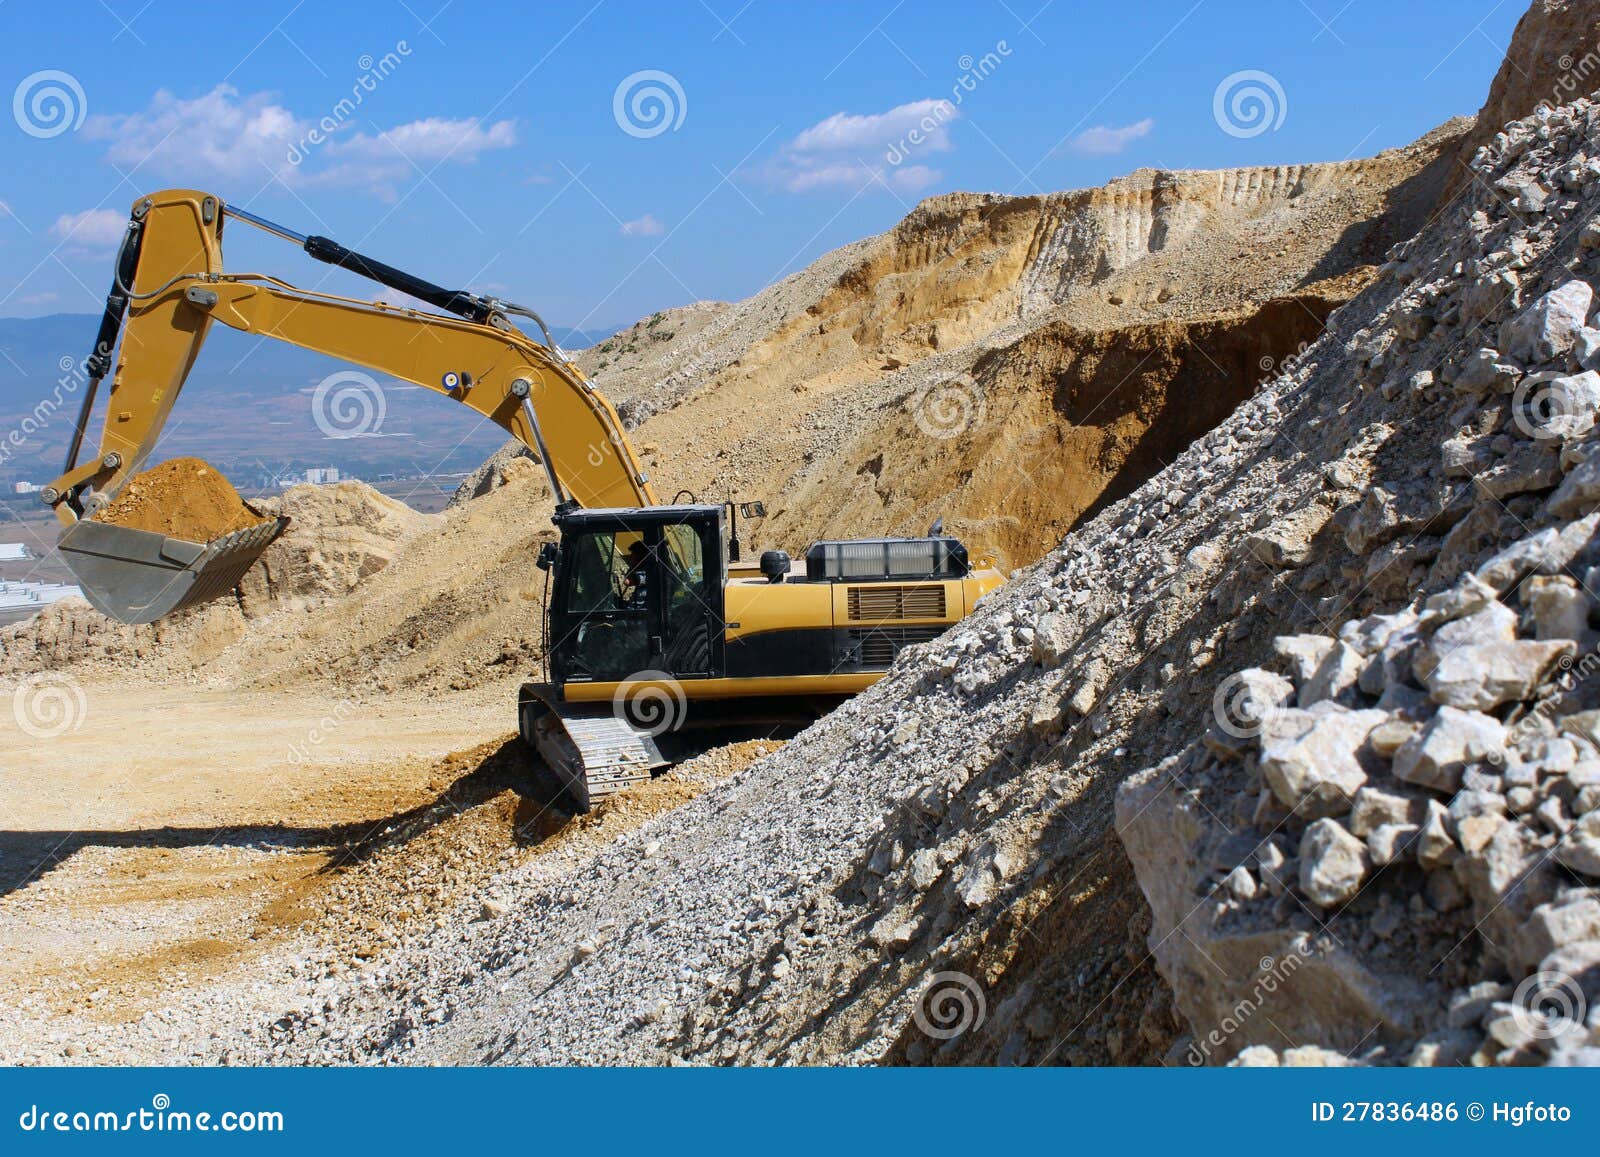 excavator crawler digger